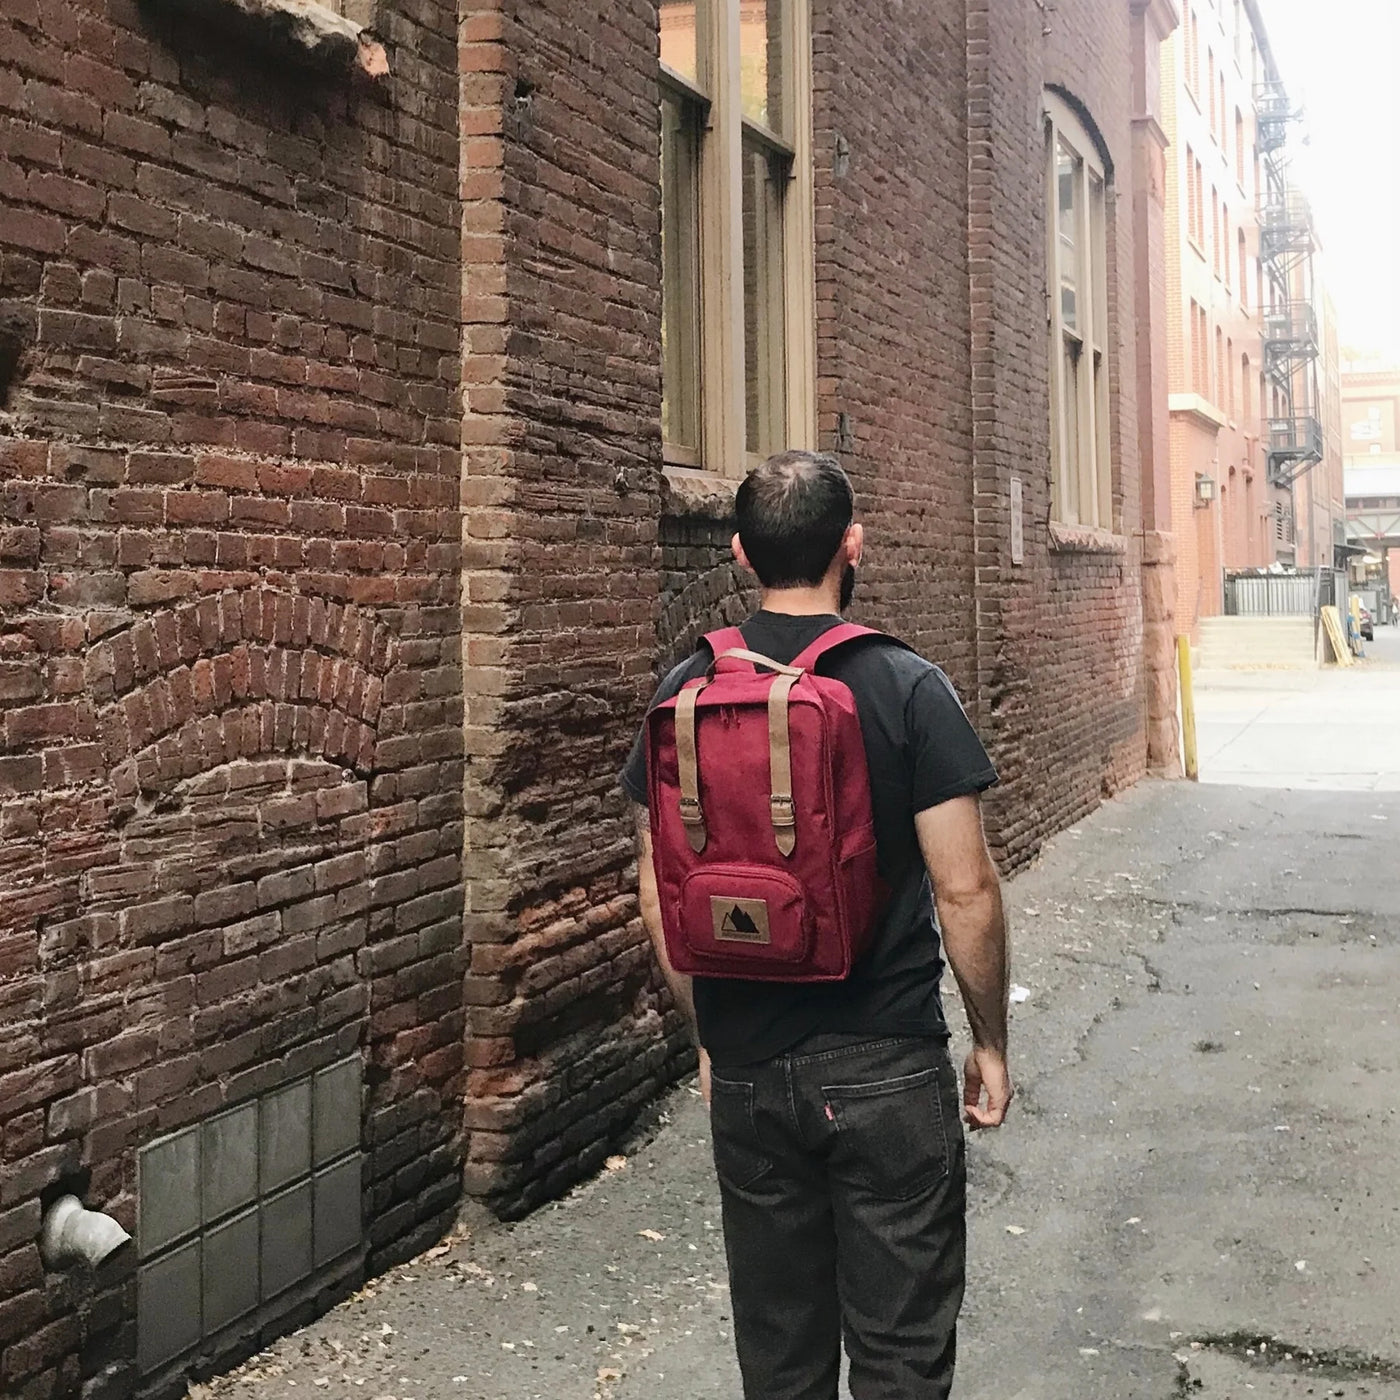 Adventurist Classic Backpack - Brick